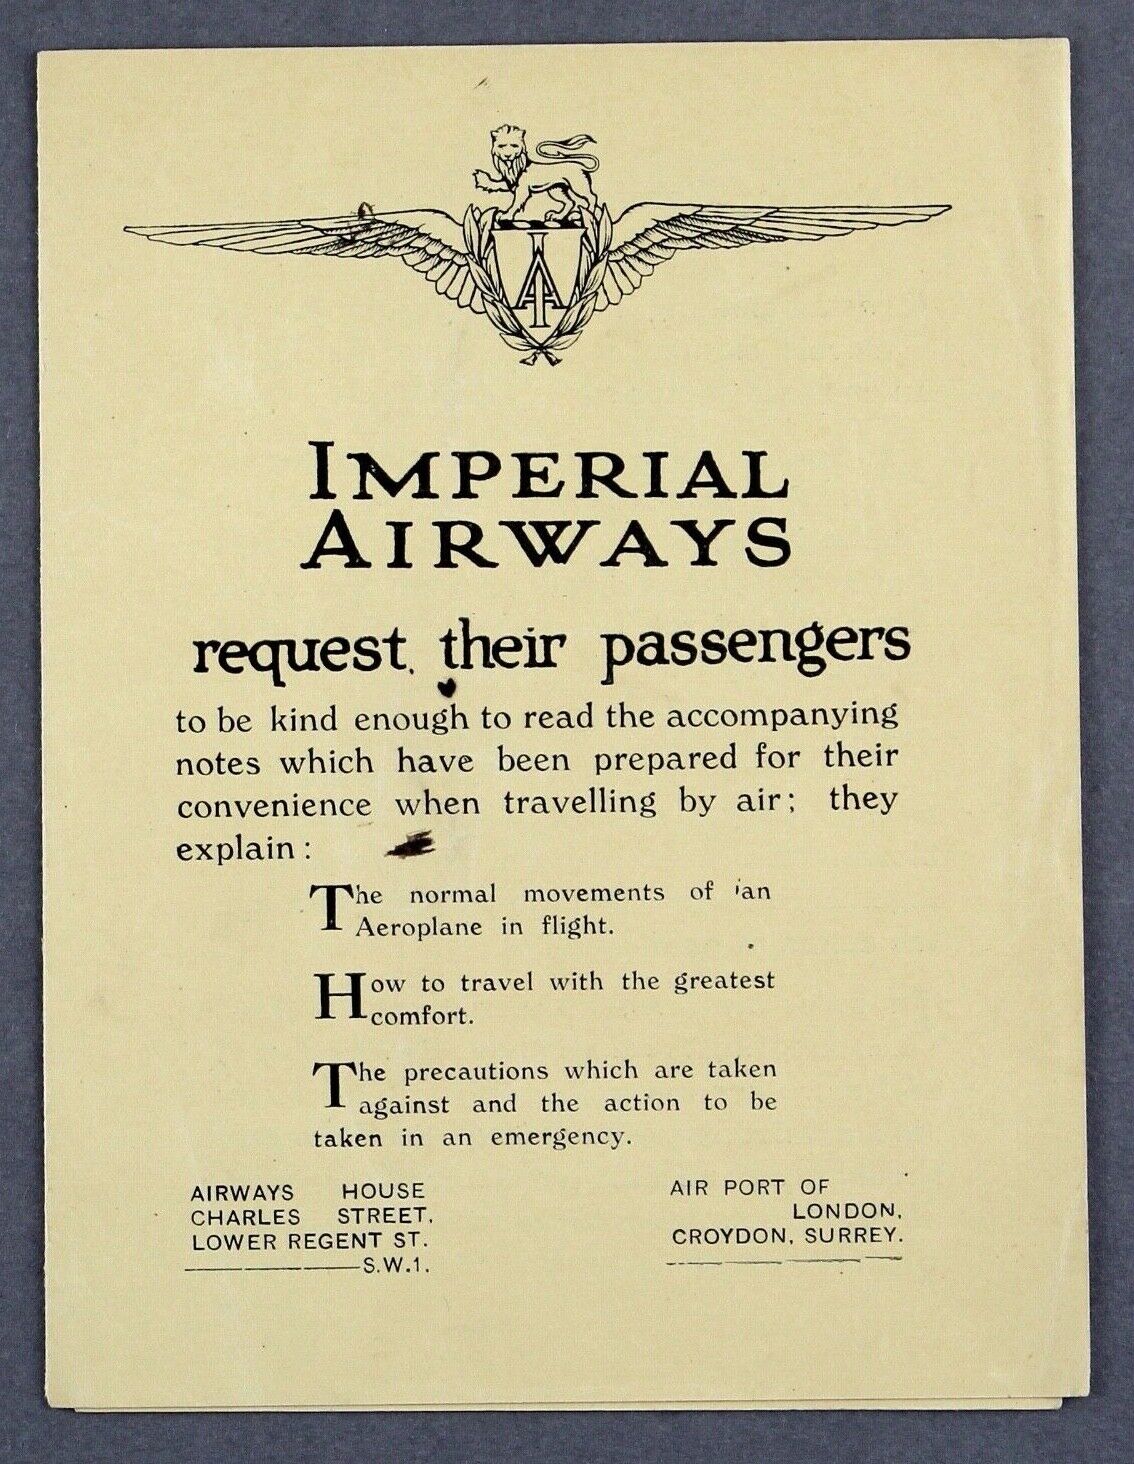 IMPERIAL AIRWAYS VINTAGE AIRLINE SAFETY CARD & INFORMATION BROCHURE 1930 